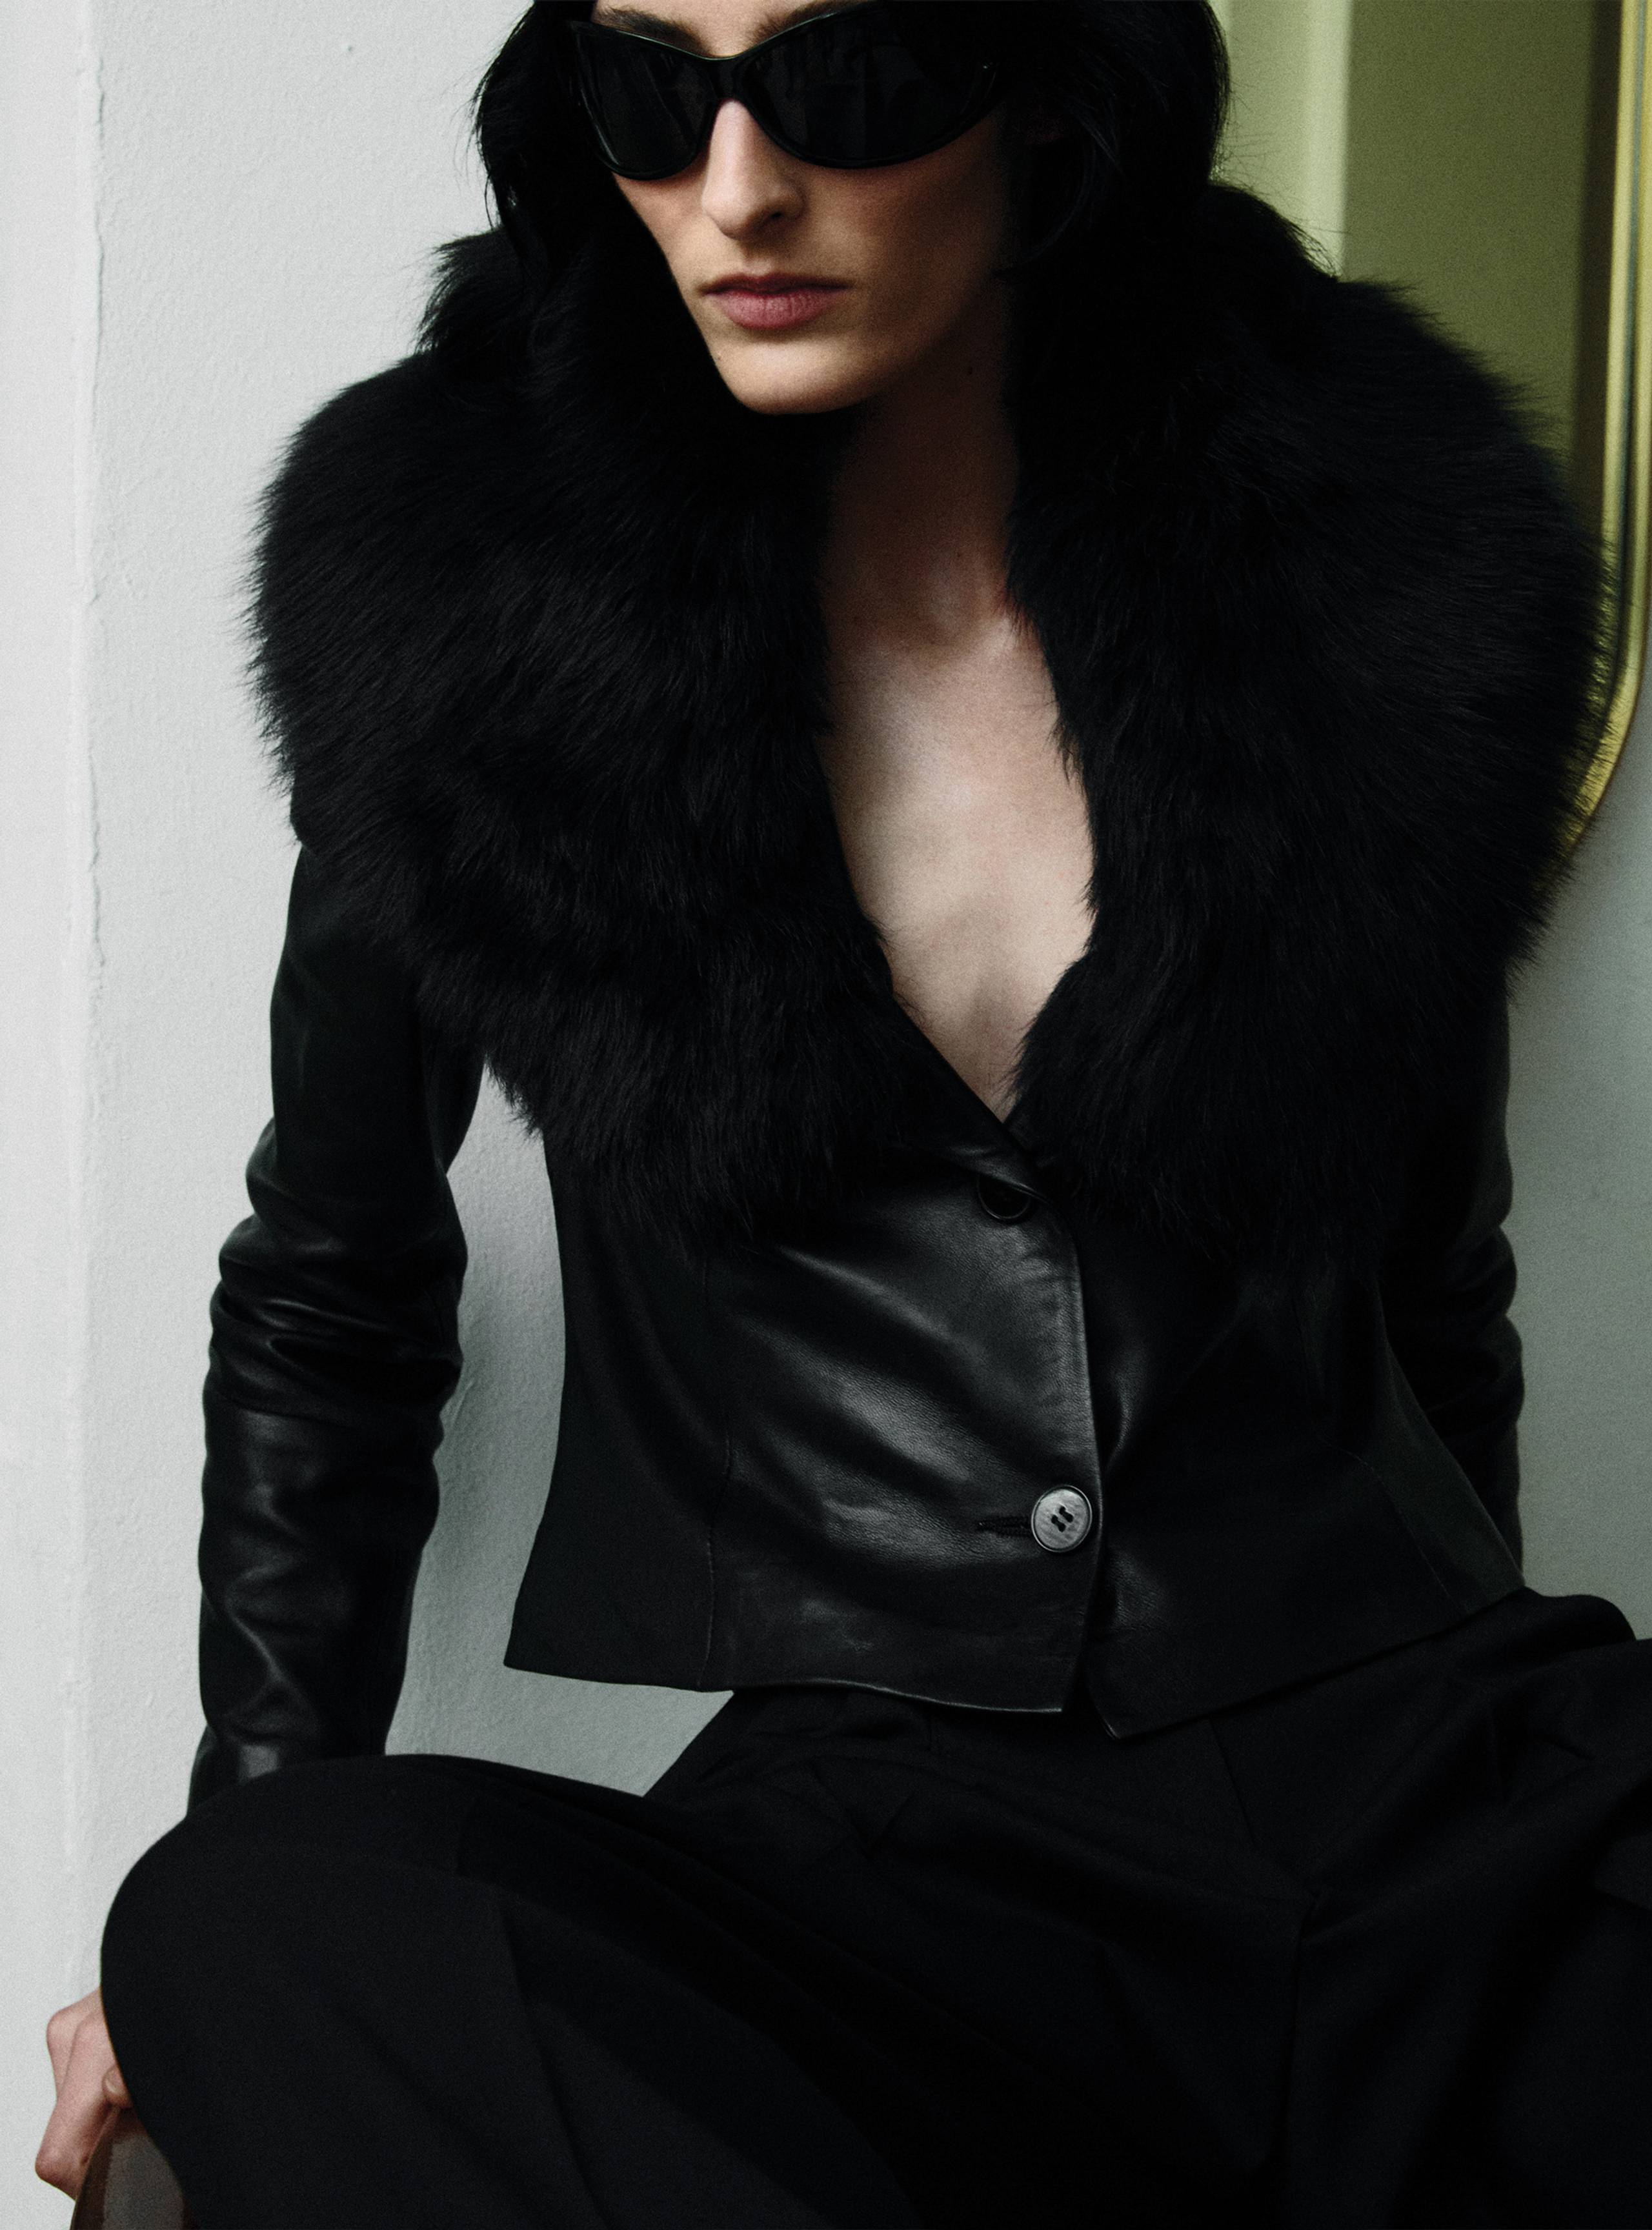 A model sitting wearing the Amber Black jacket